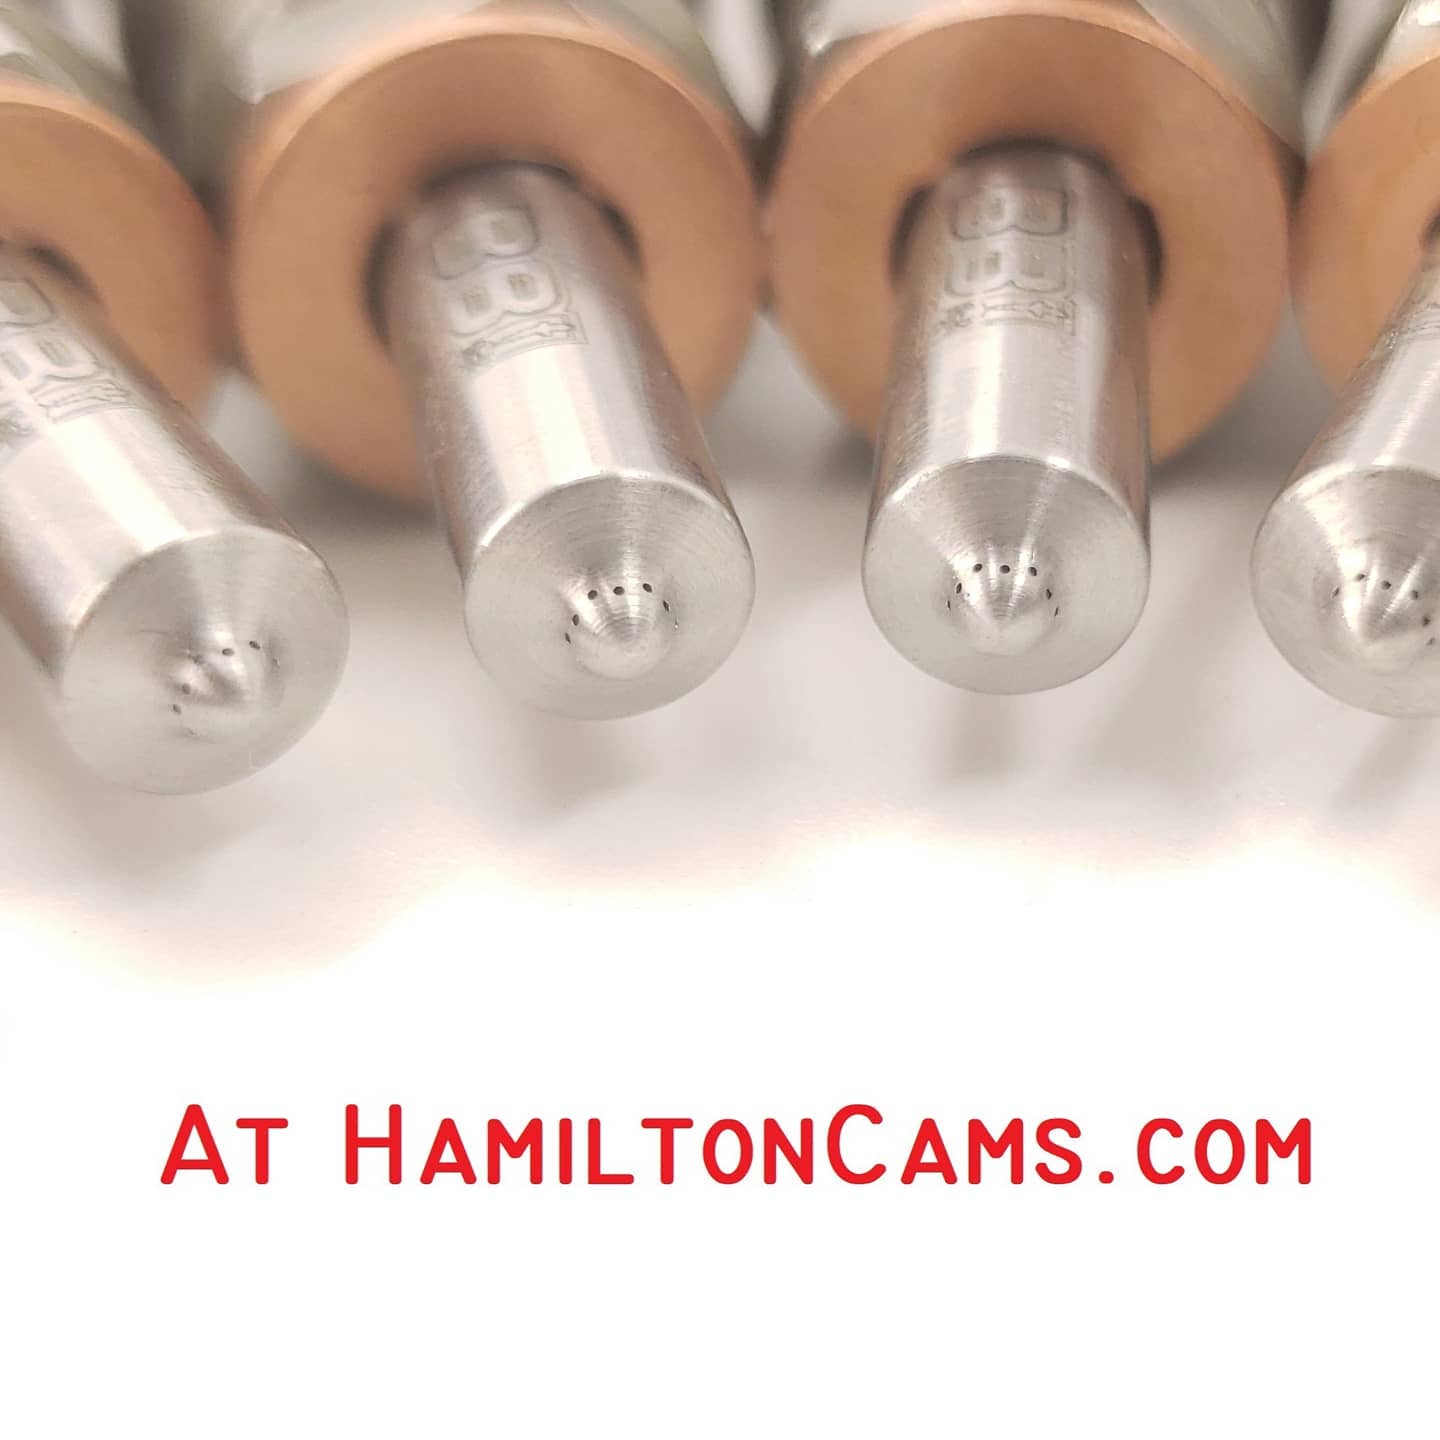 Hamilton Cams